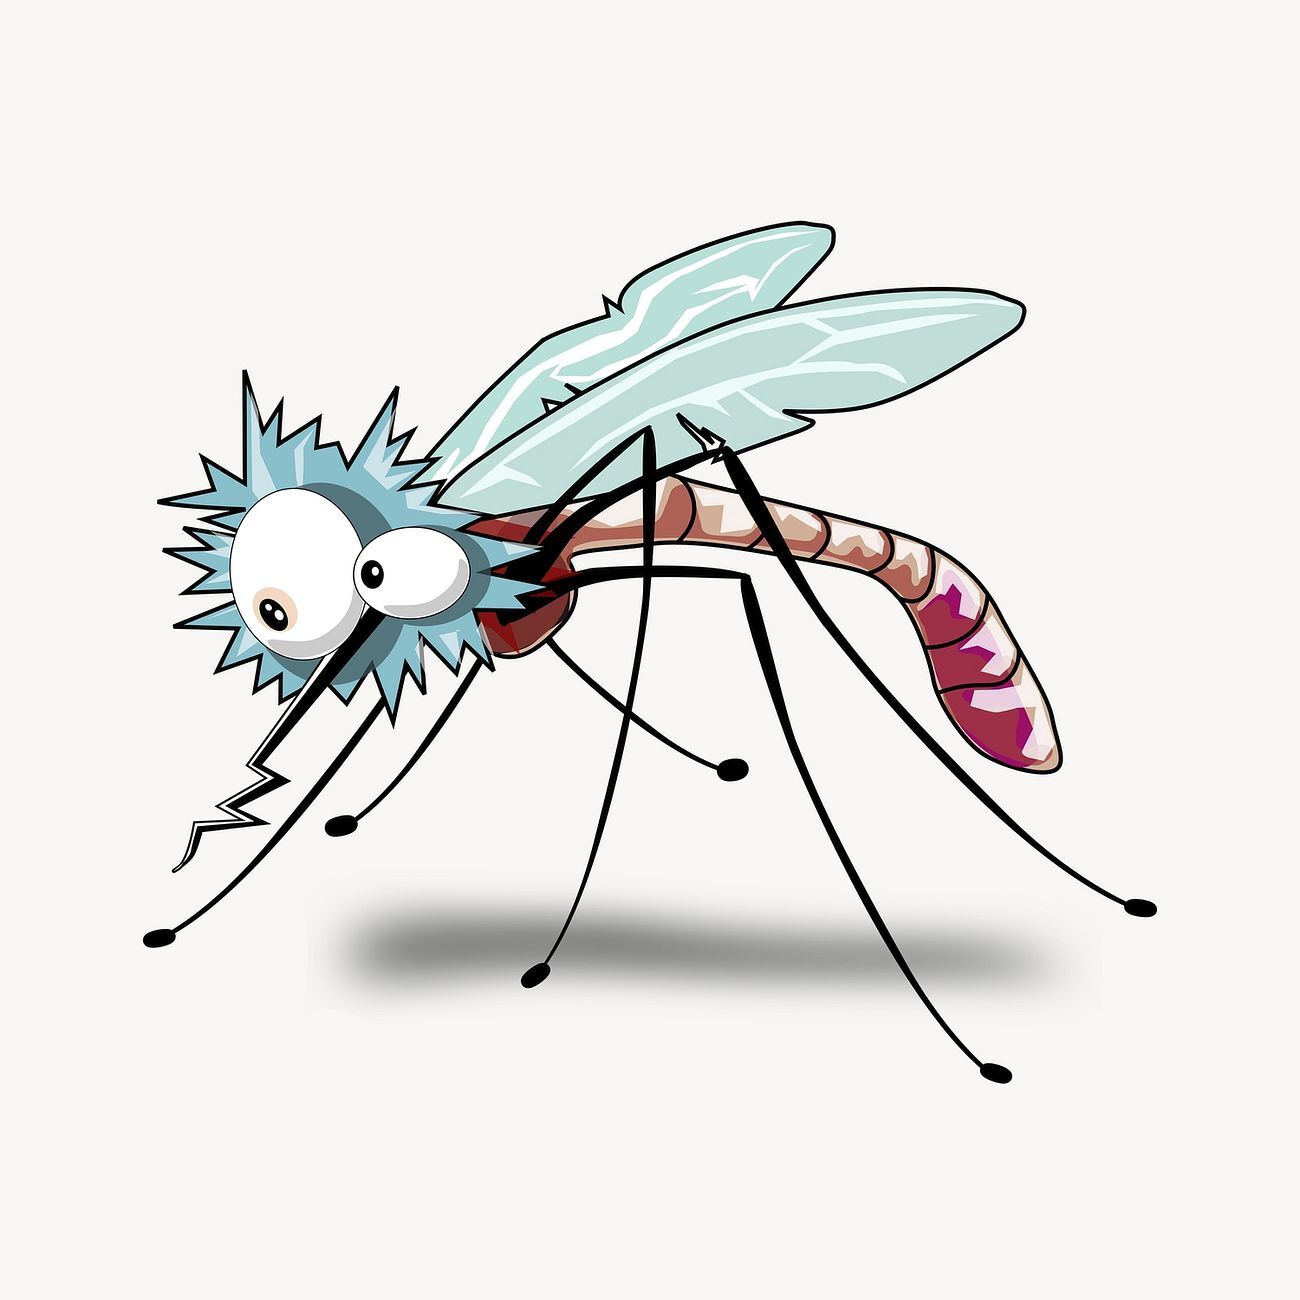 Mosquito cartoon clipart, illustration psd. Free public domain CC0 image.